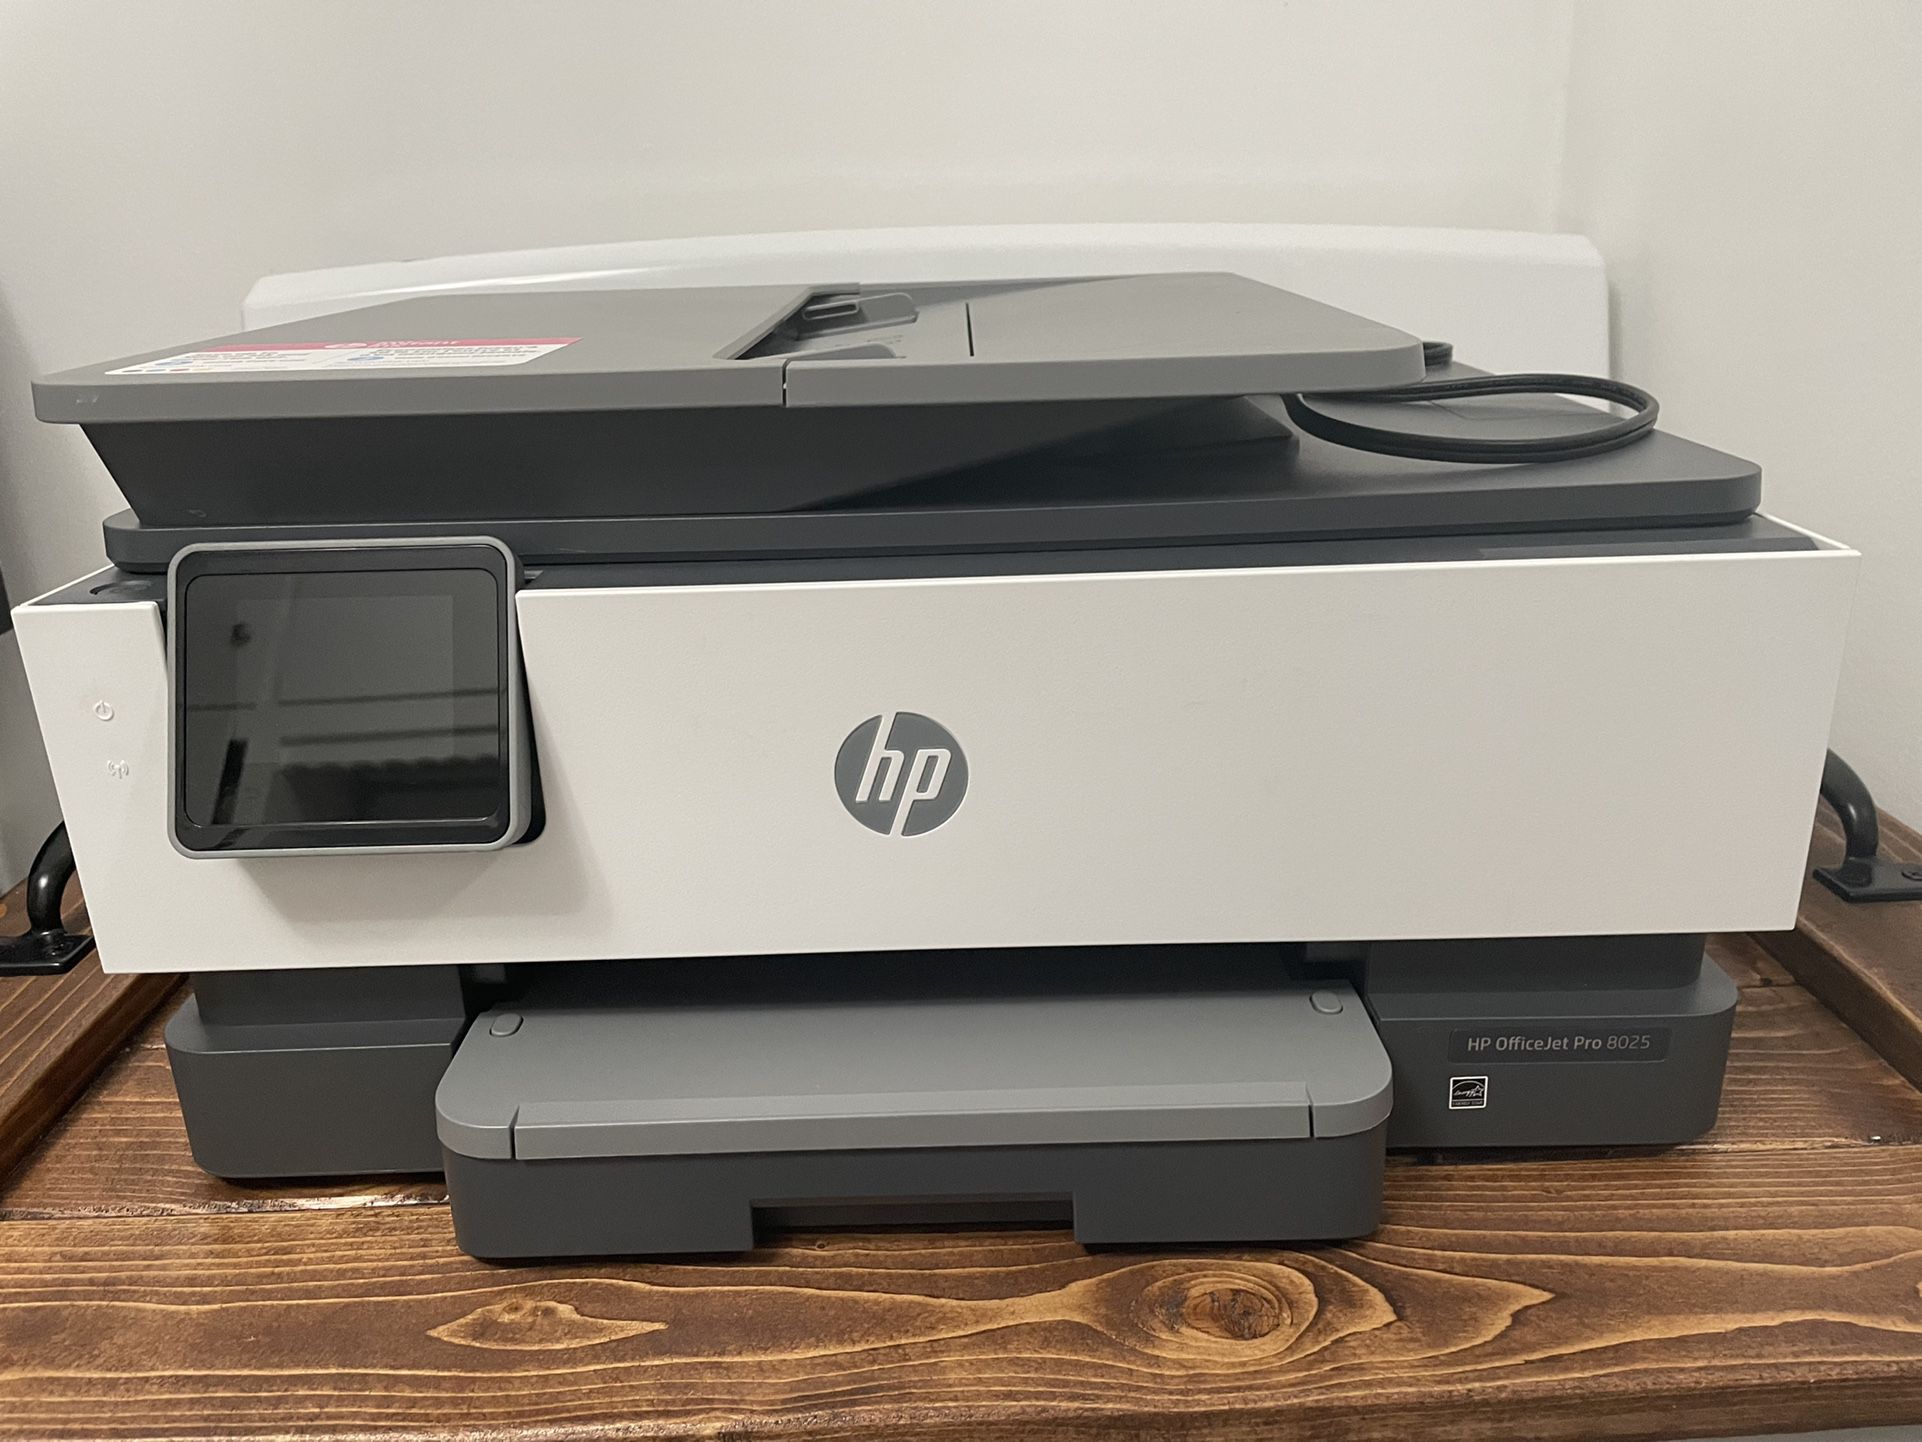 Office Jet Pro Printer 8025 